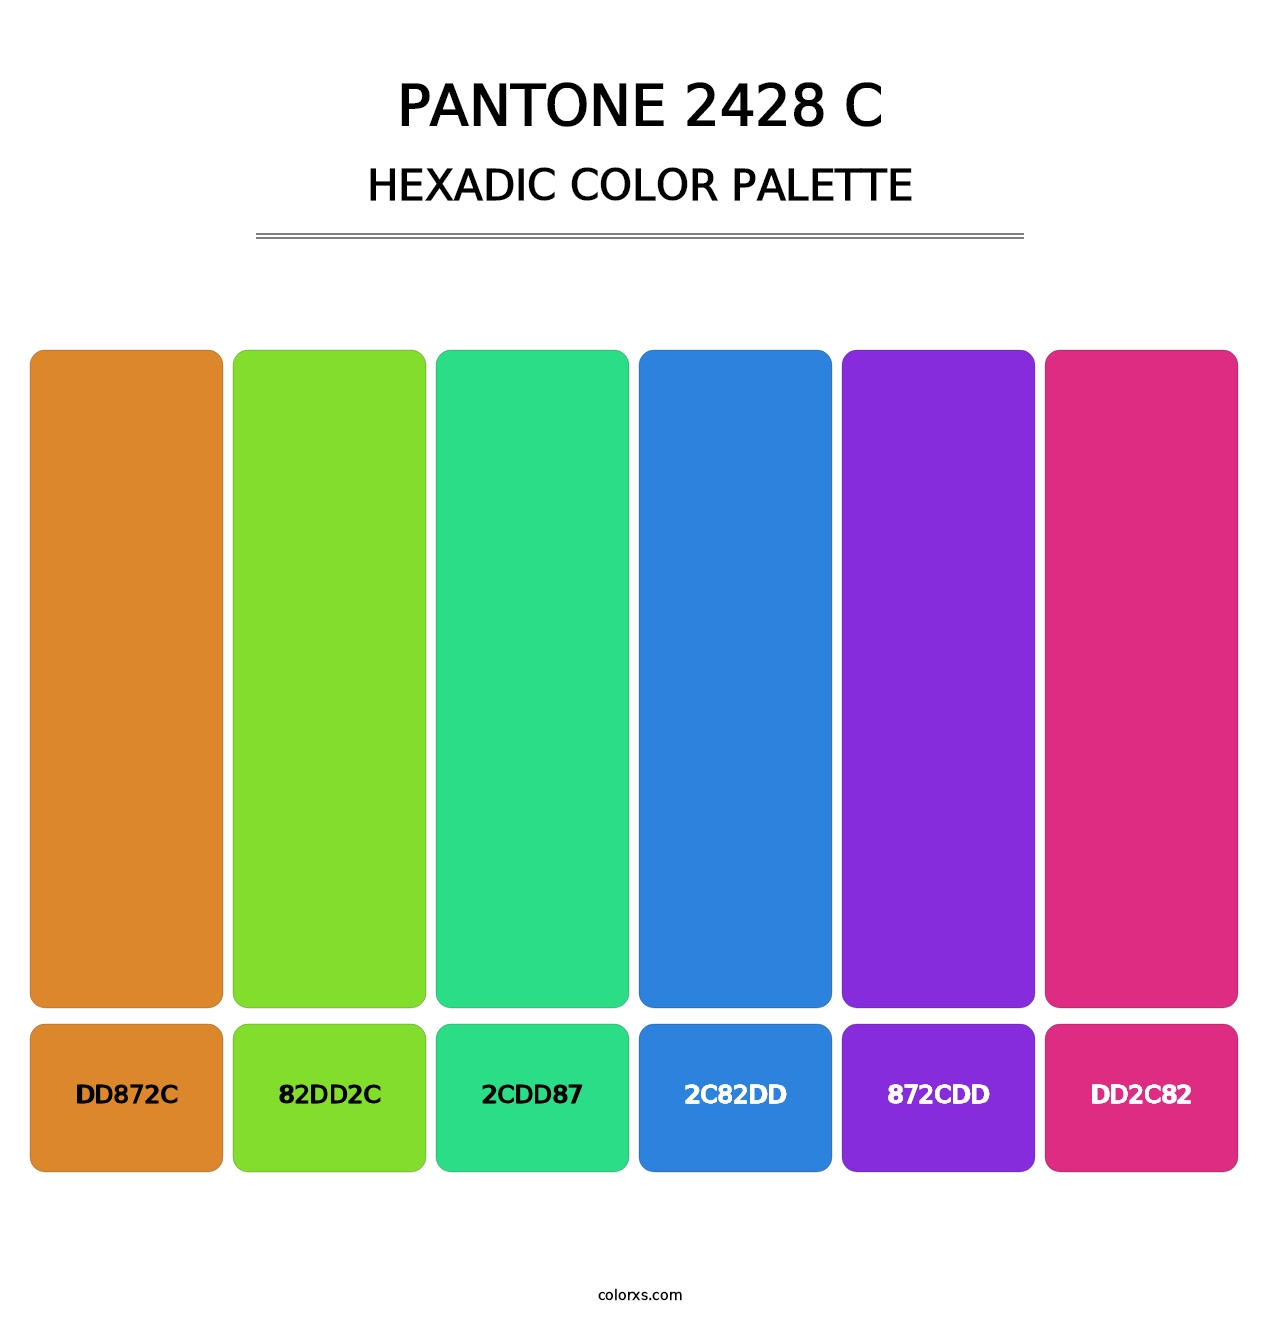 PANTONE 2428 C - Hexadic Color Palette